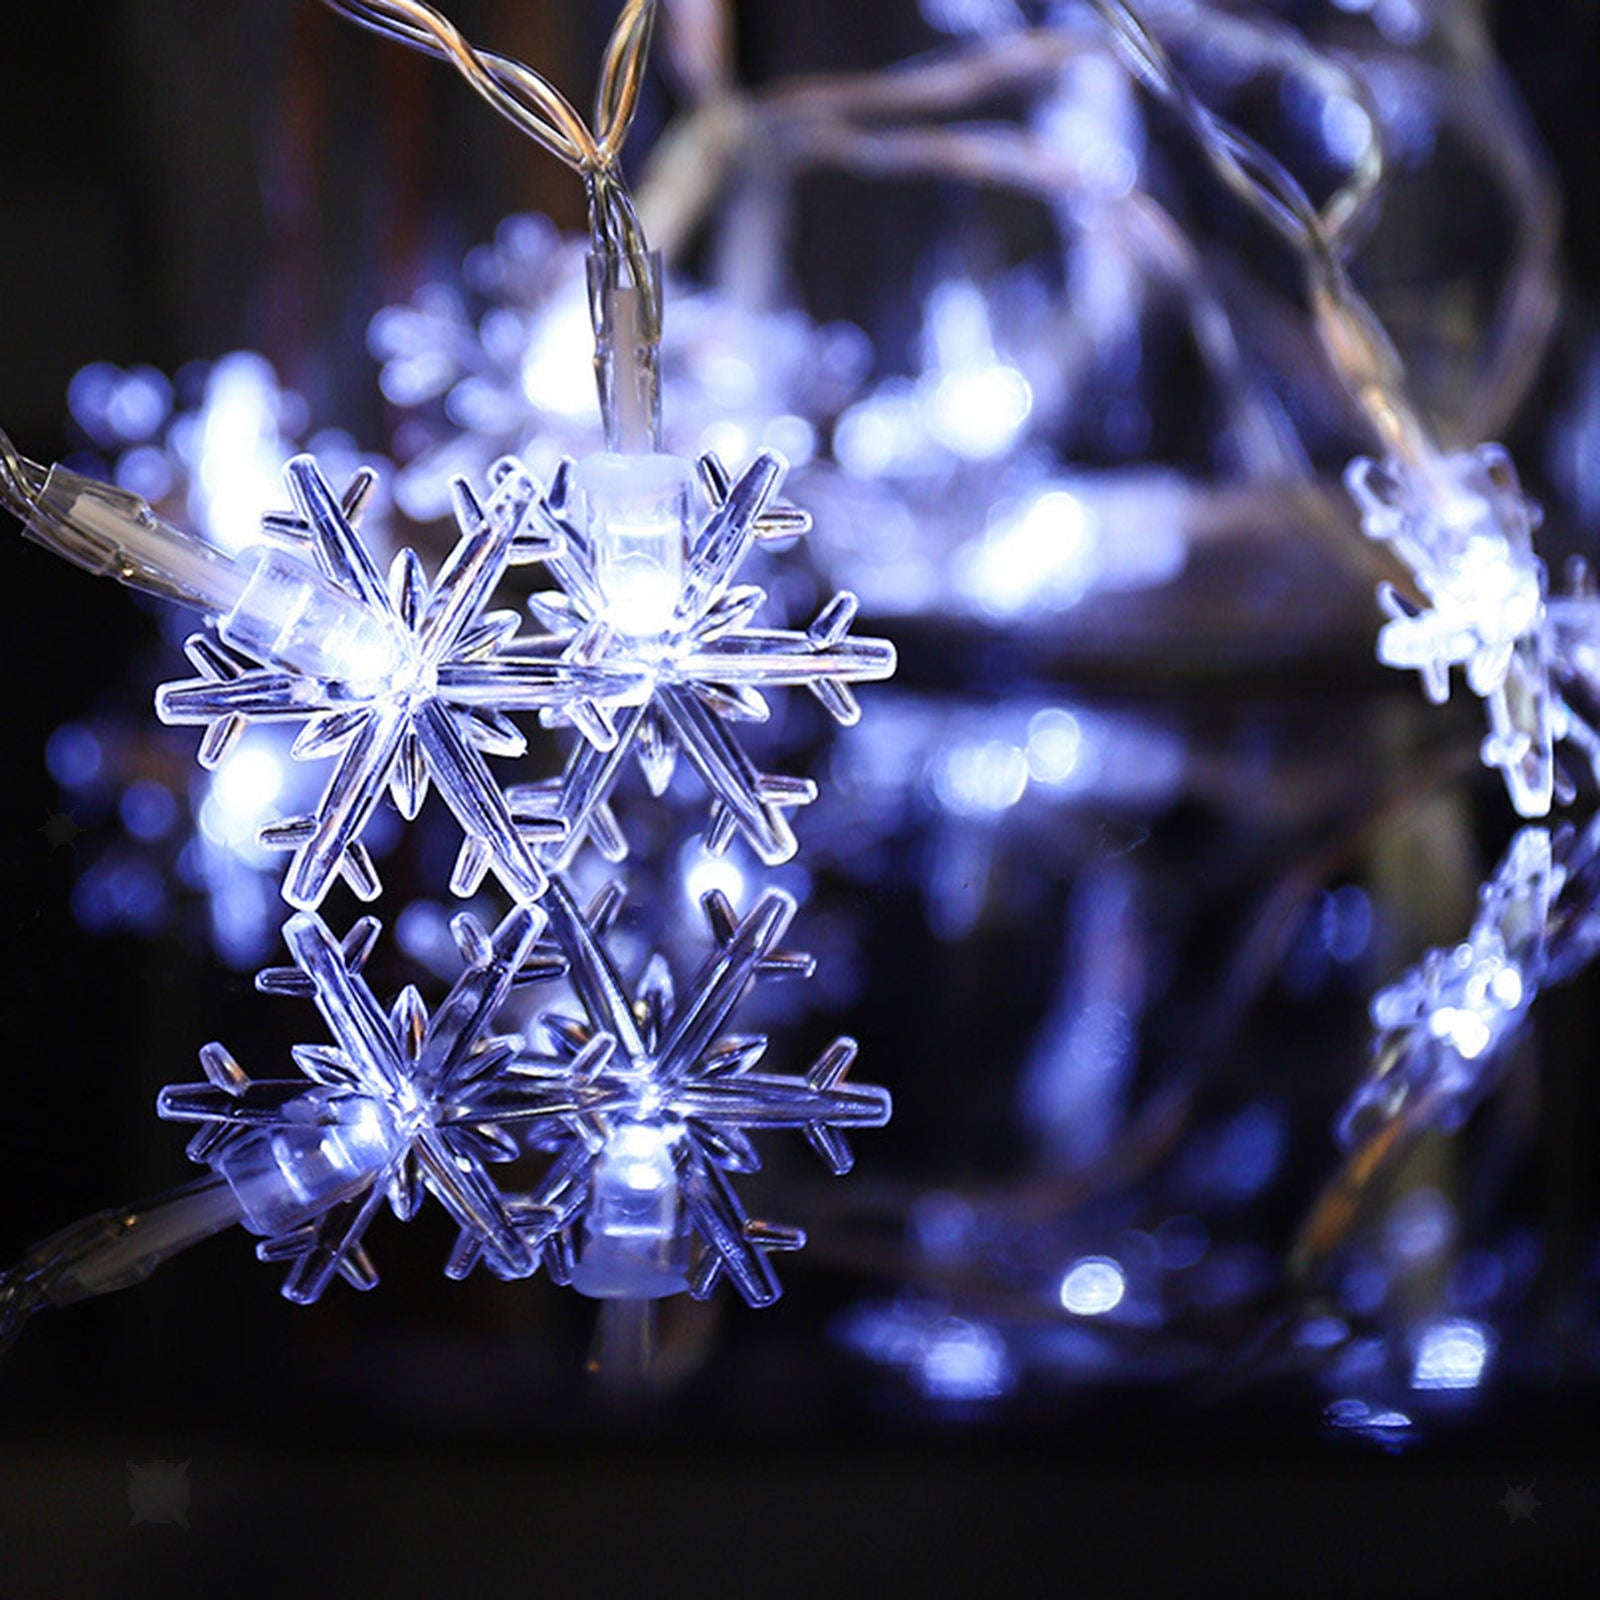 Snowflake Fairy Lights Decorative Garden Party Event Flash String LEDs Light